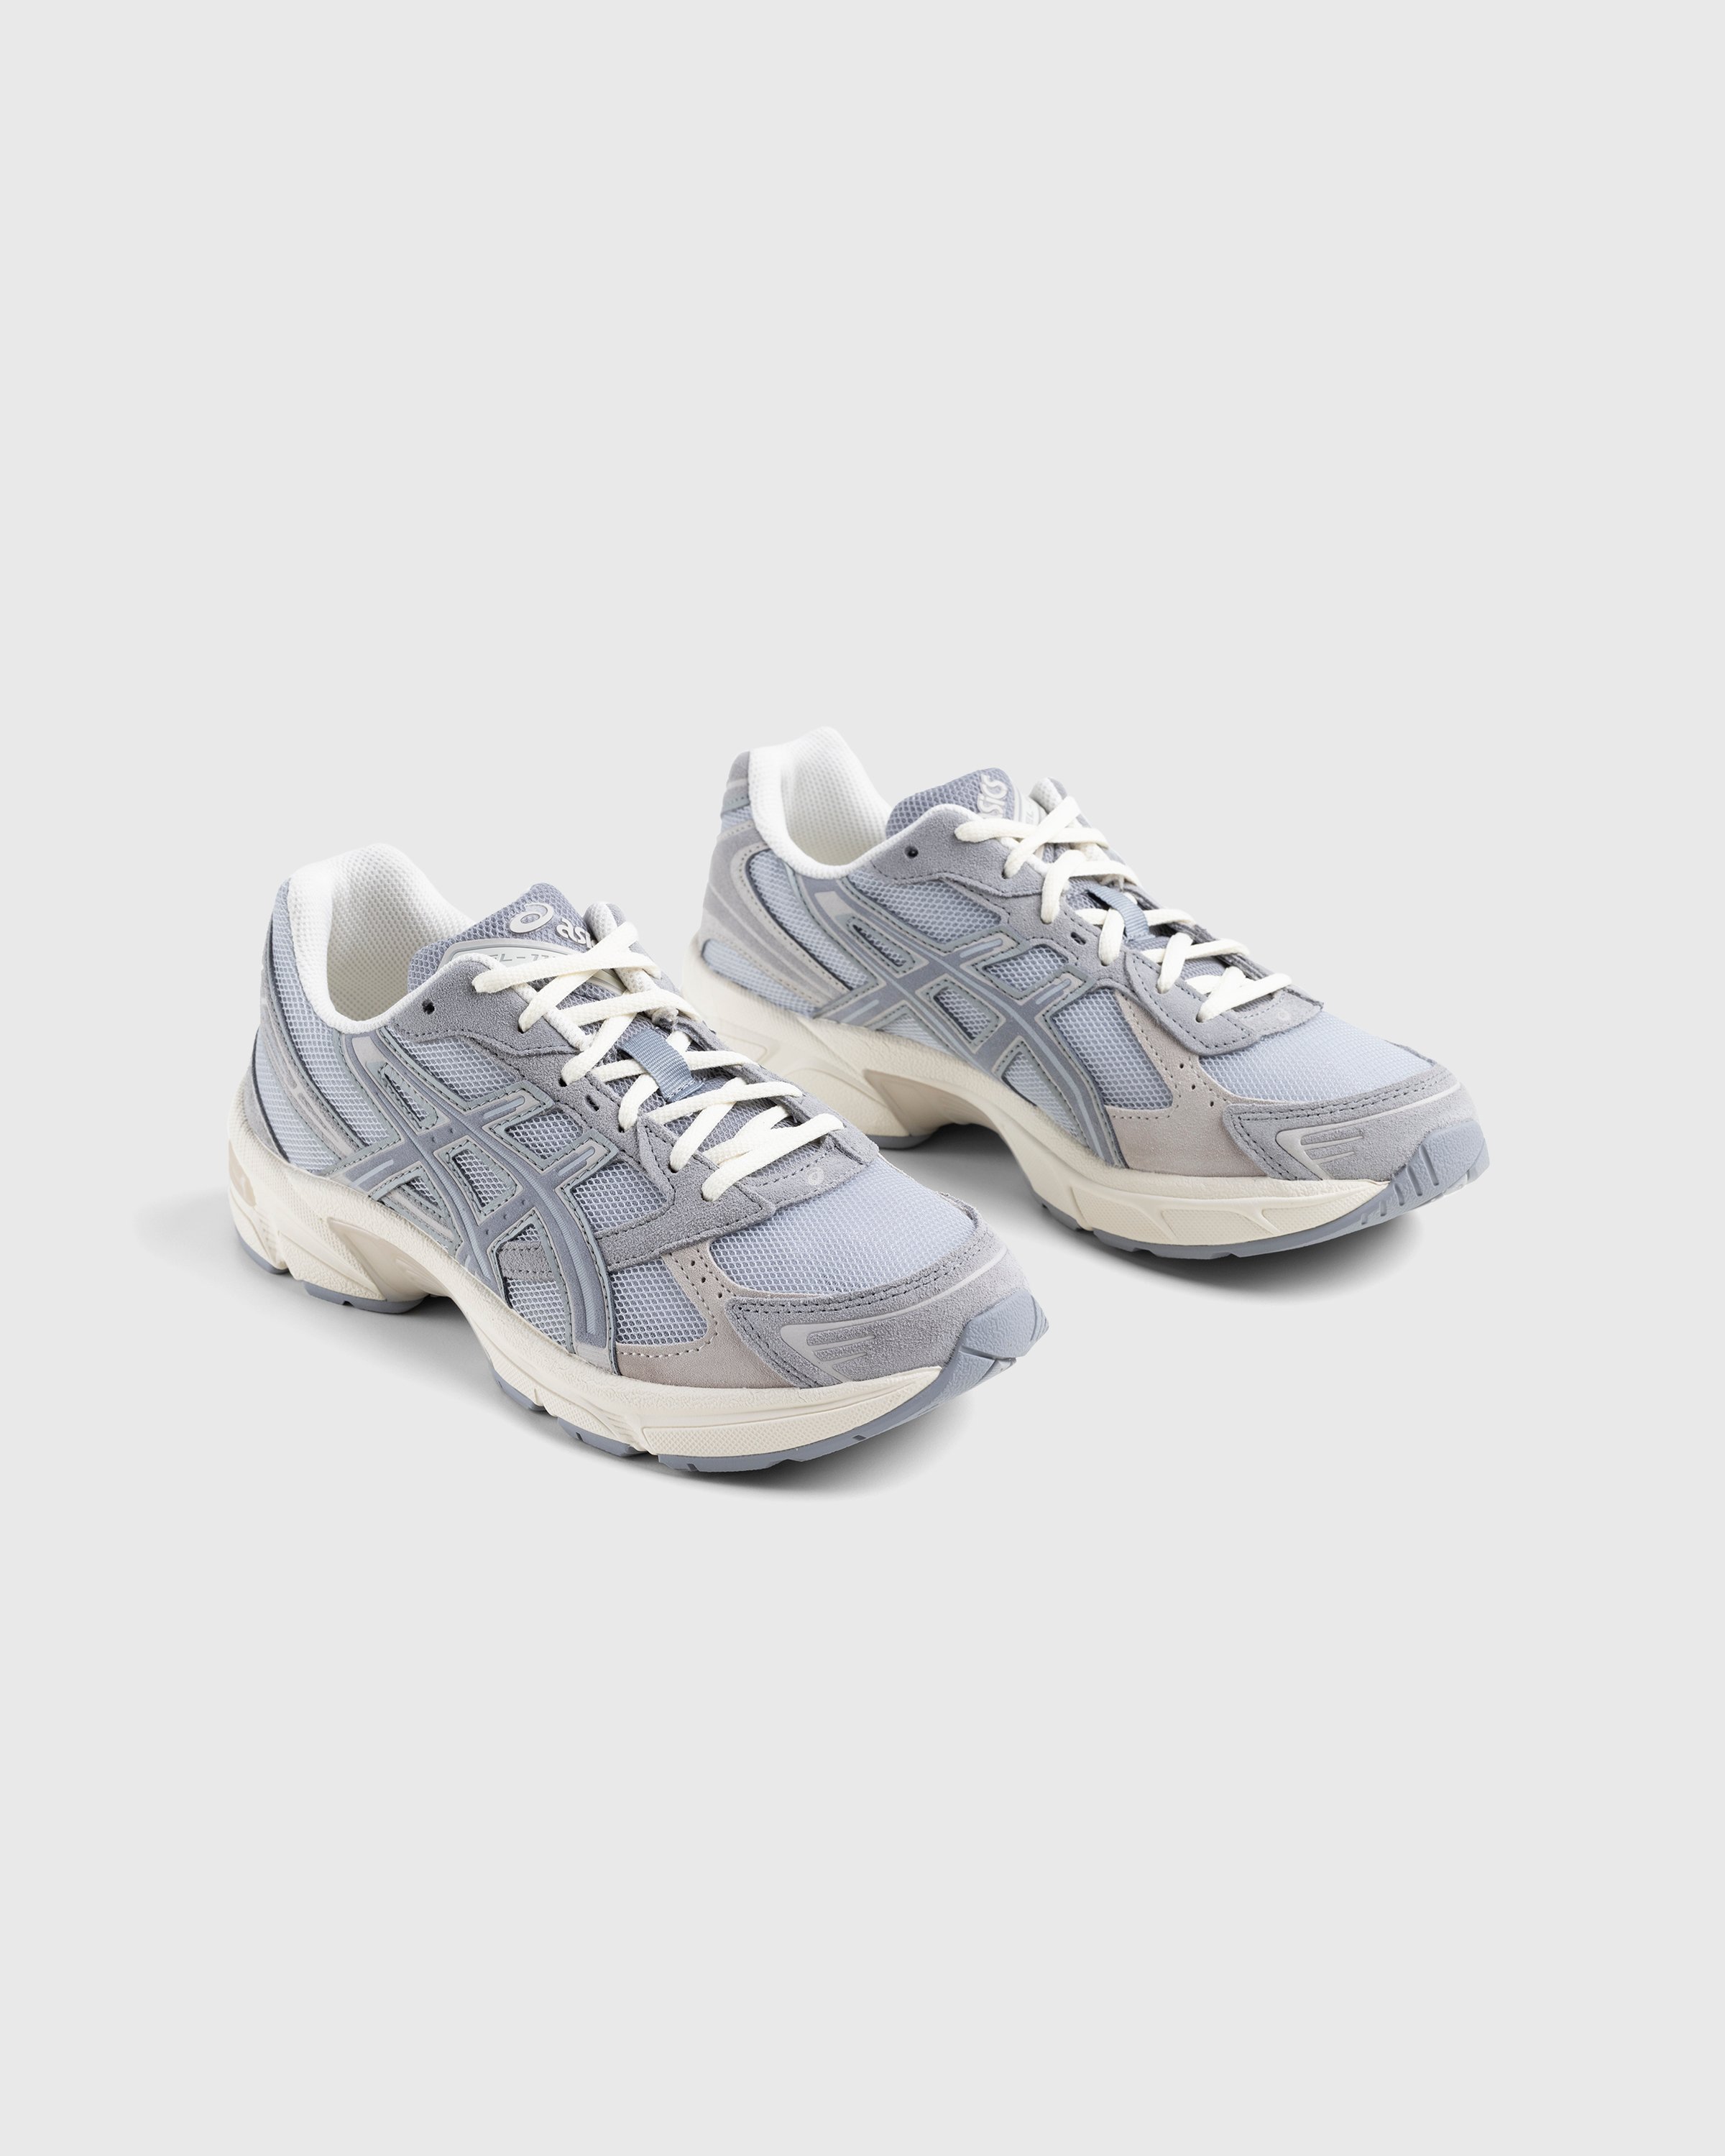 asics - Gel-1130 Piedmont Grey/Sheet Rock - Footwear - Grey - Image 2